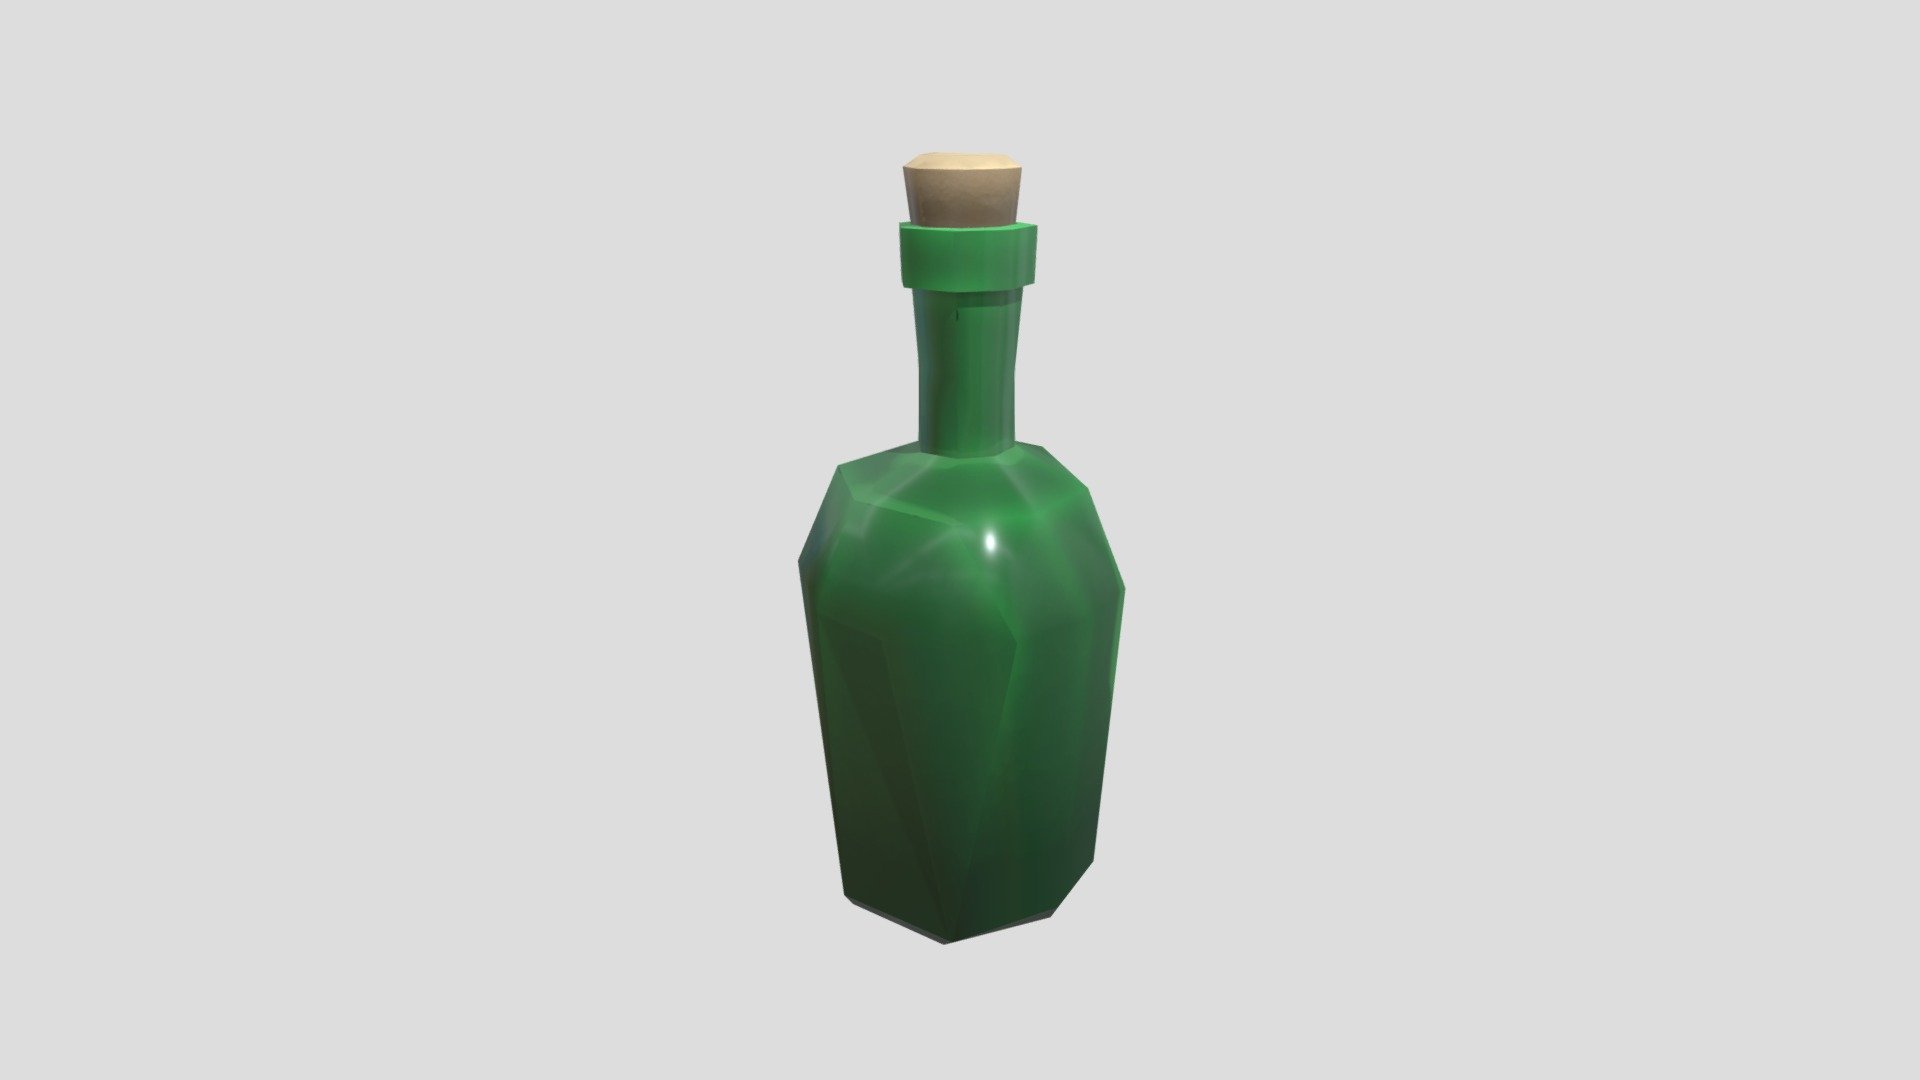 Lowpoly Rum Bottle for your games, renders, etc 3d model